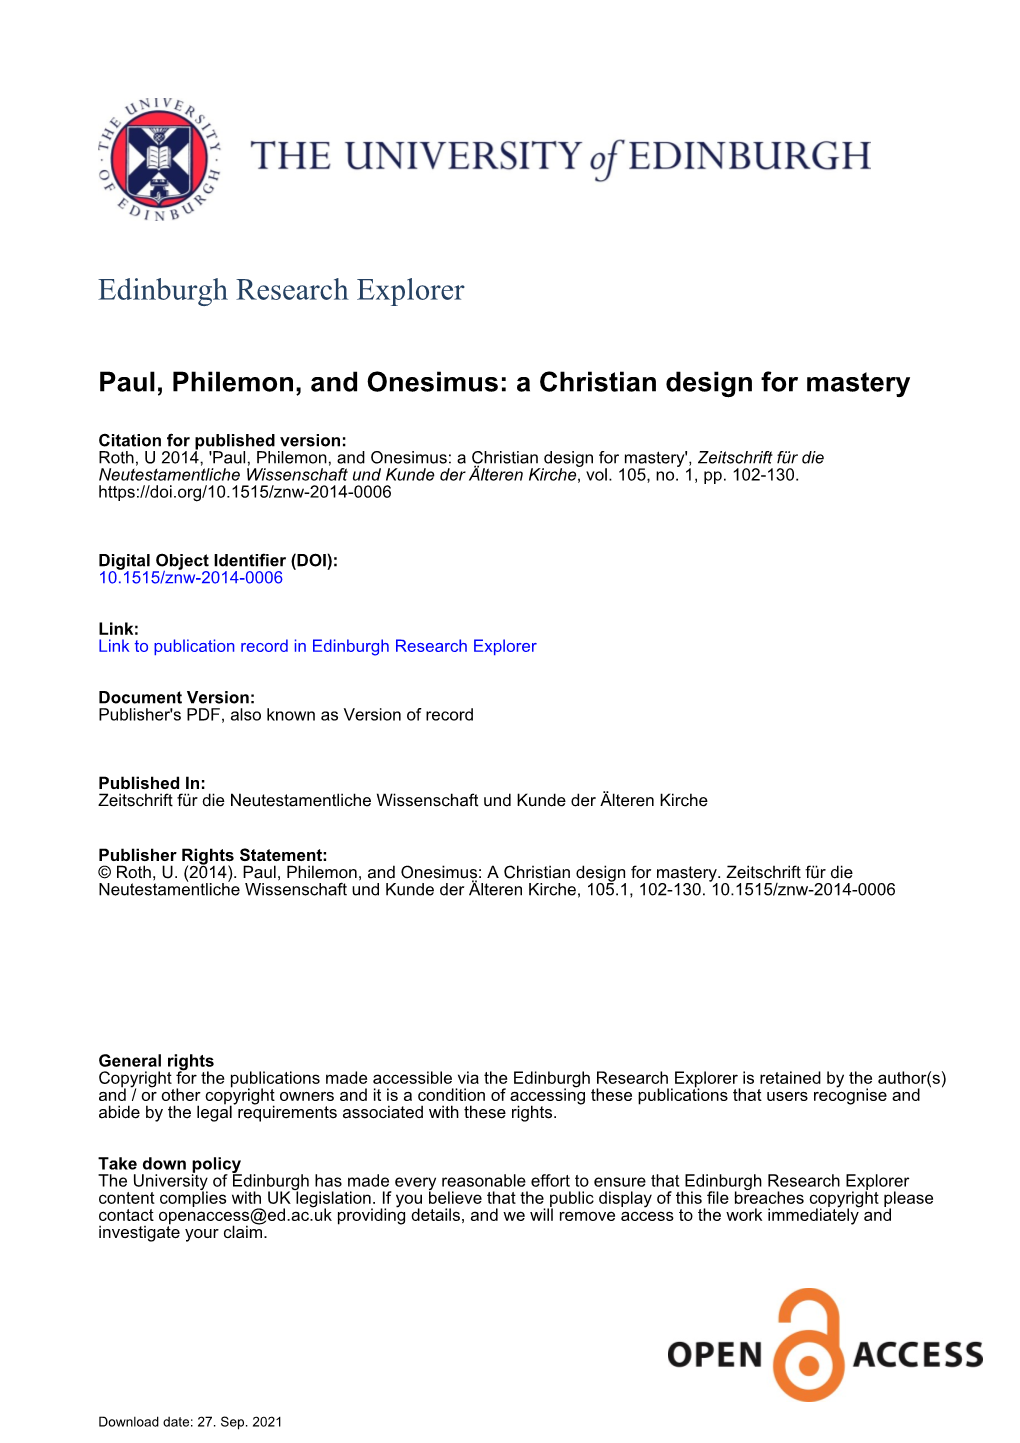 Paul, Philemon, and Onesimus: a Christian Design for Mastery